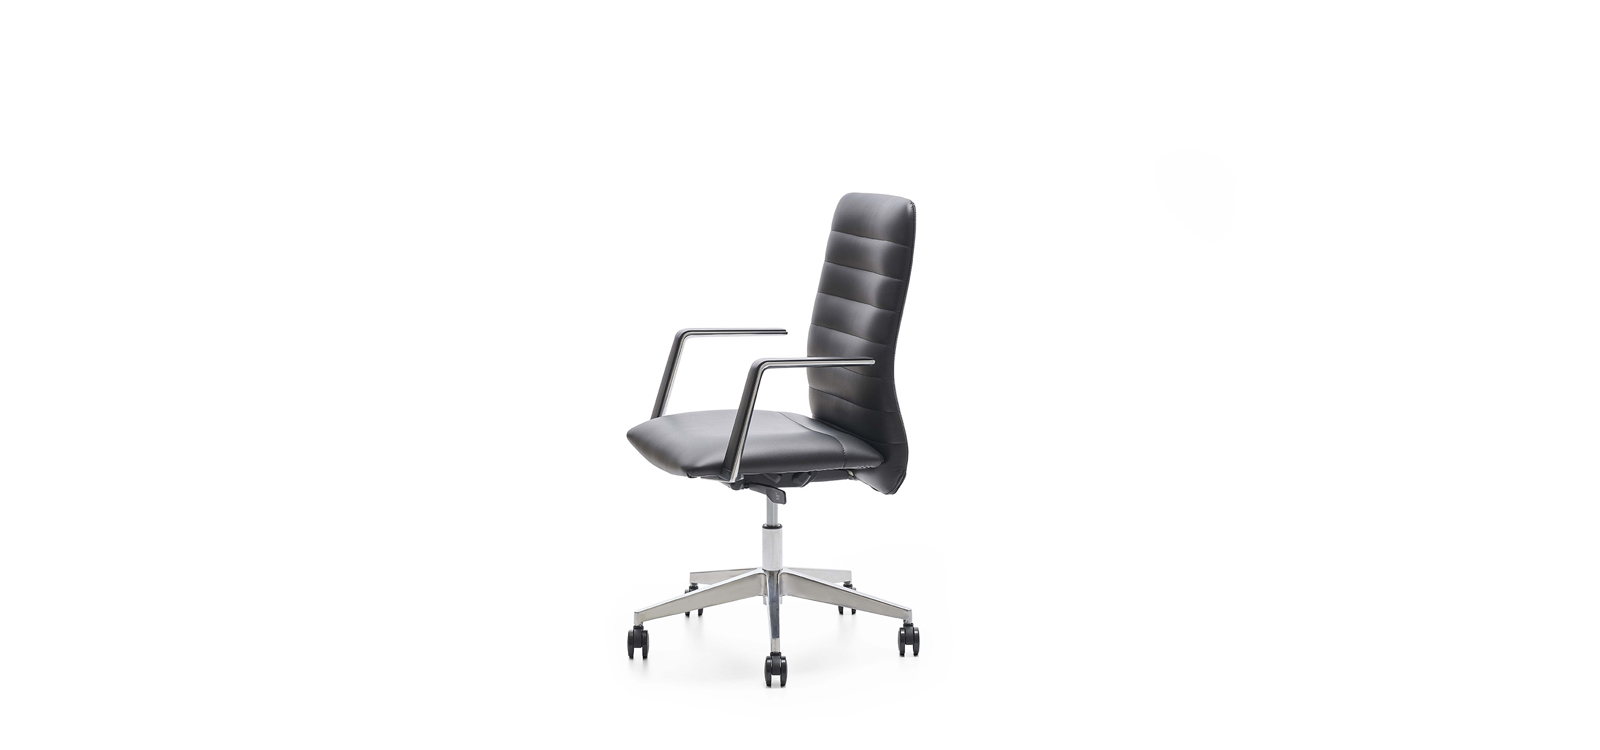 Steel - Office Chair